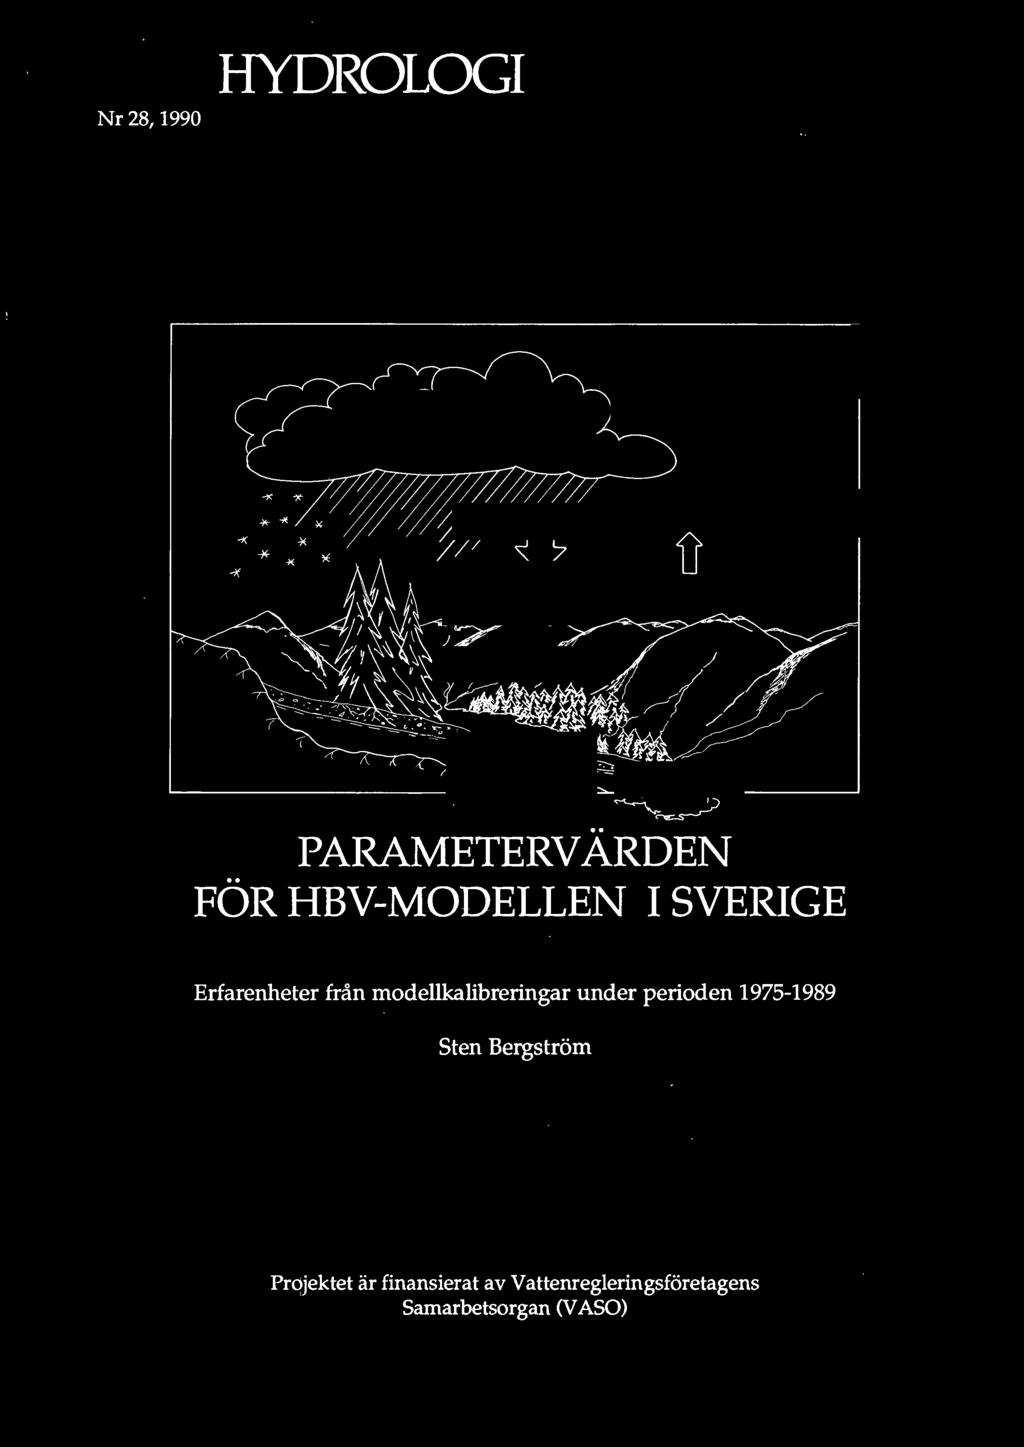 modellkalibreringar under perioden 1975-1989 Sten Bergström